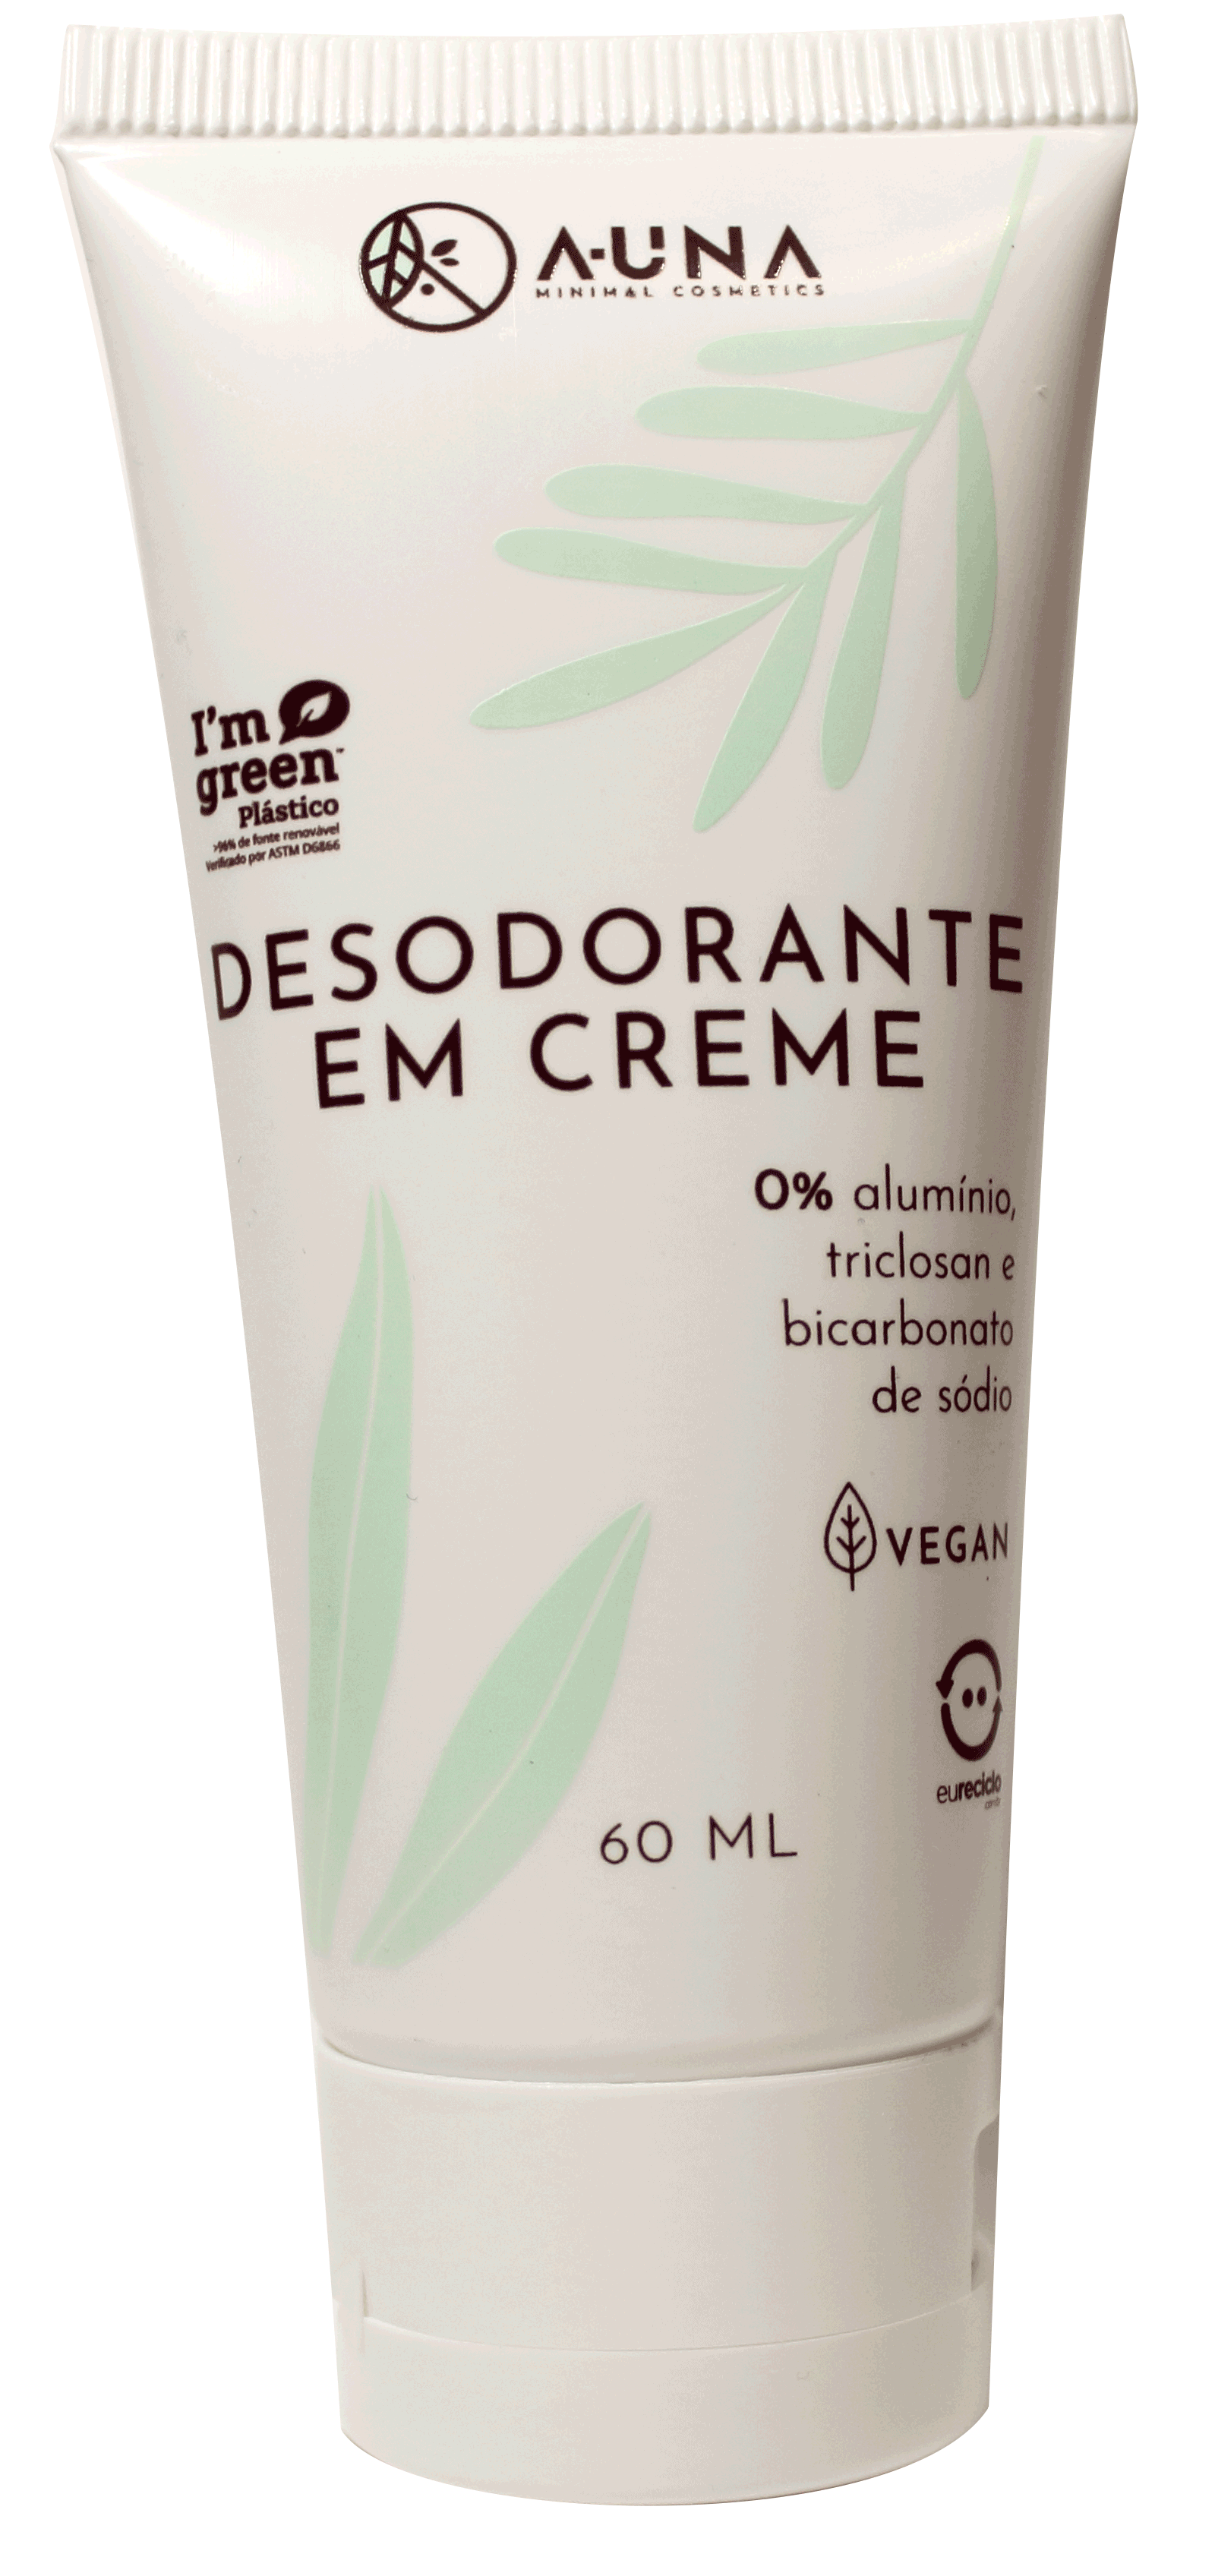 Desodorante em creme A-UNA - 0% Alumínio, Triclosan e Bicarbonato de Sódio - 60ml